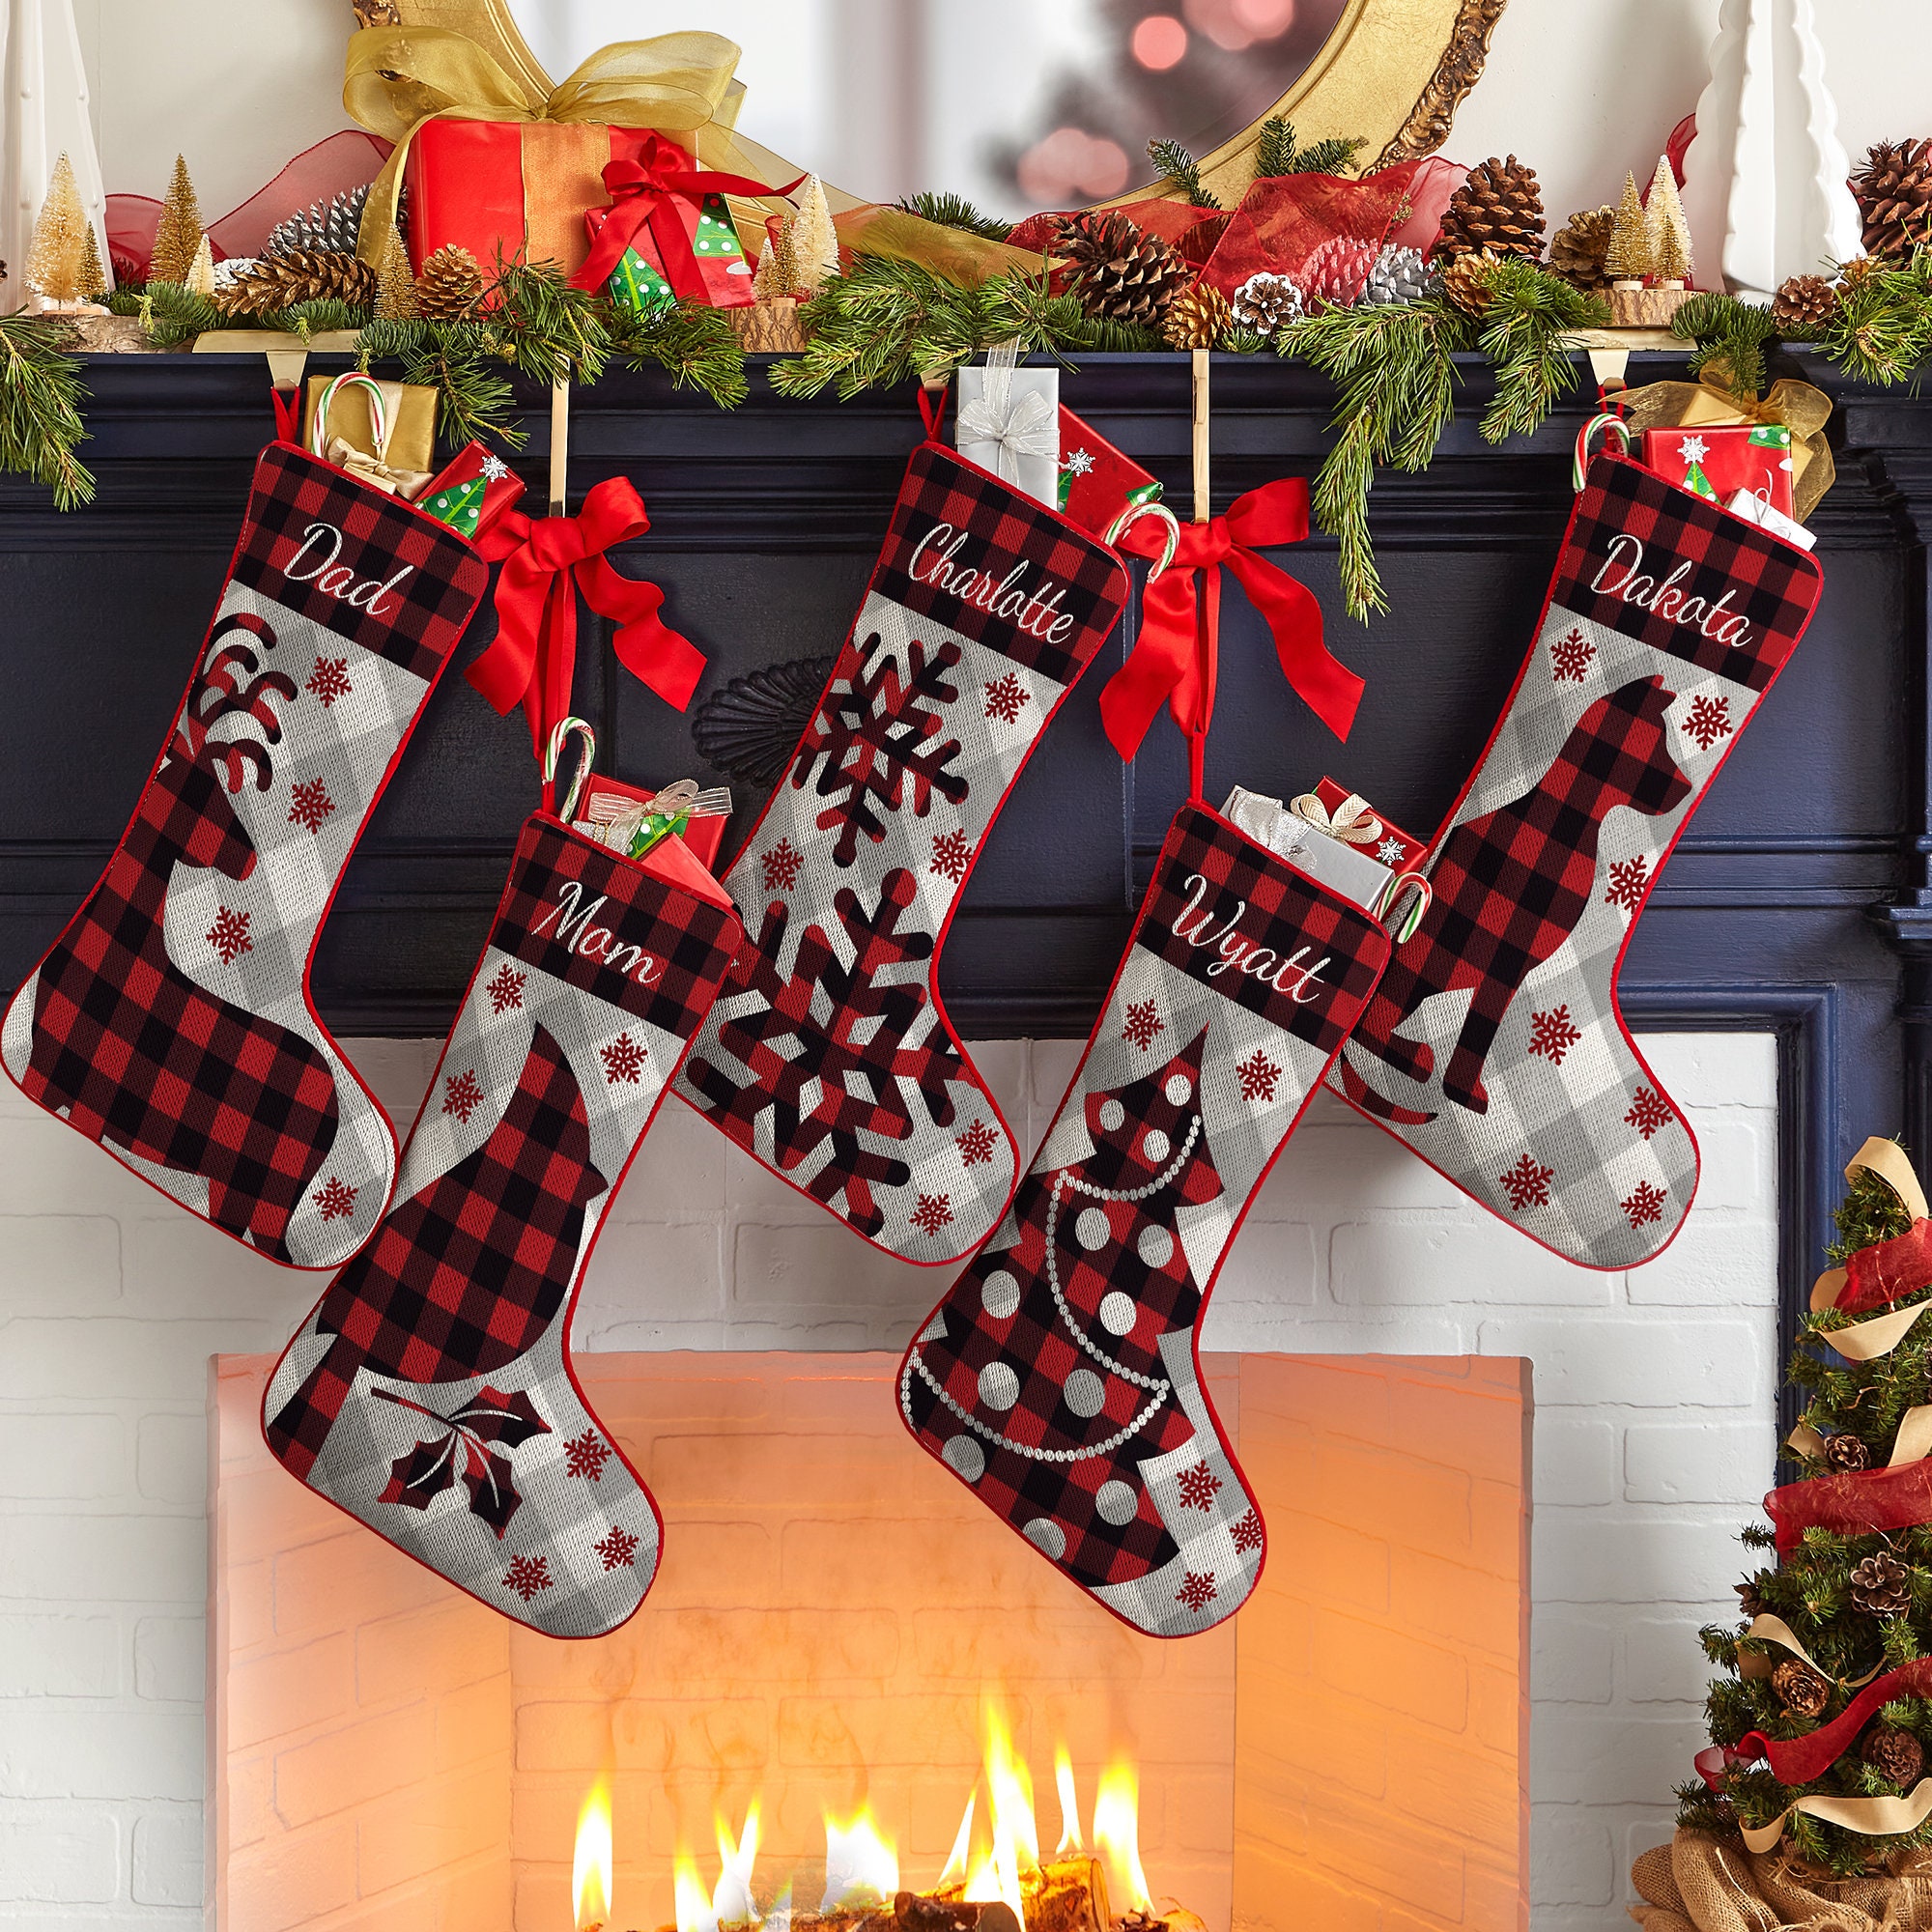 Personalized Needlepoint Stocking Family Stockings Old-fashioned